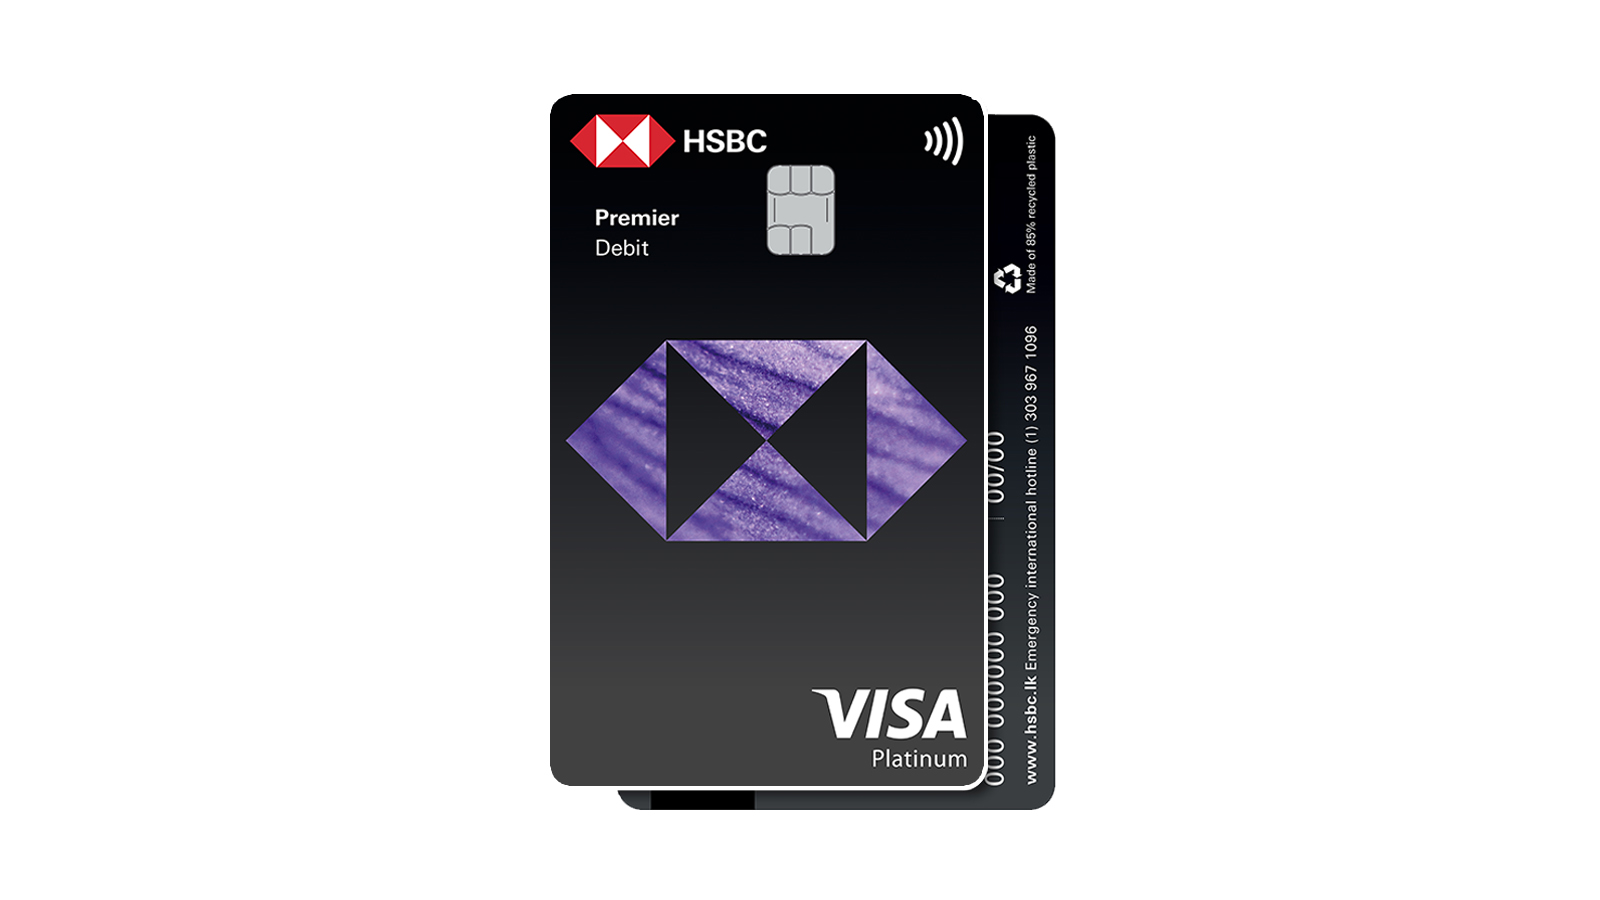 hsbc advance debit card